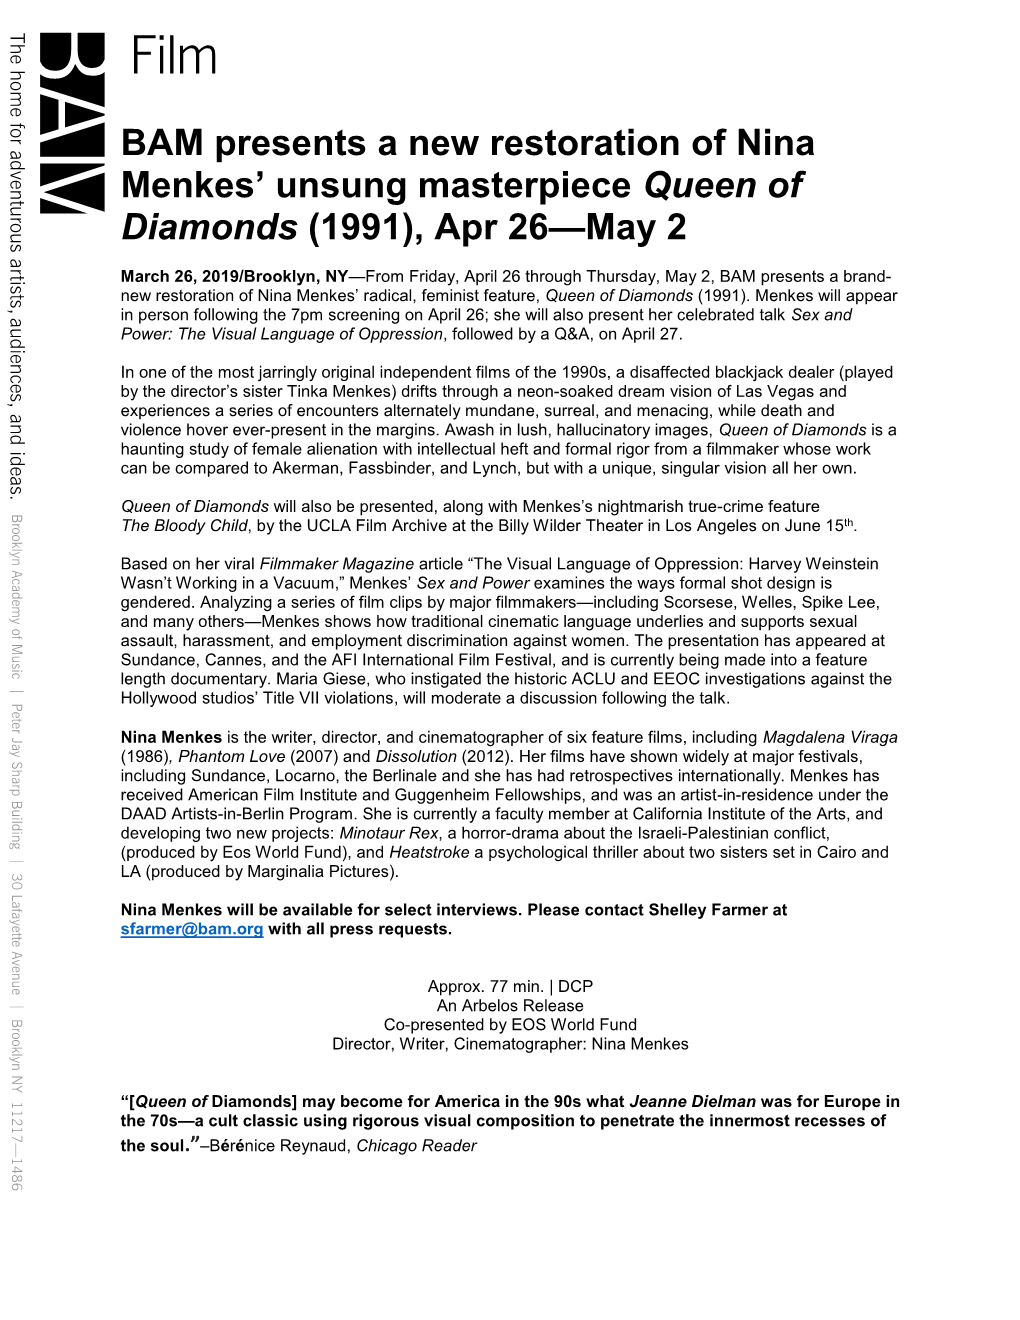 BAM Presents a New Restoration of Nina Menkes' Unsung Masterpiece